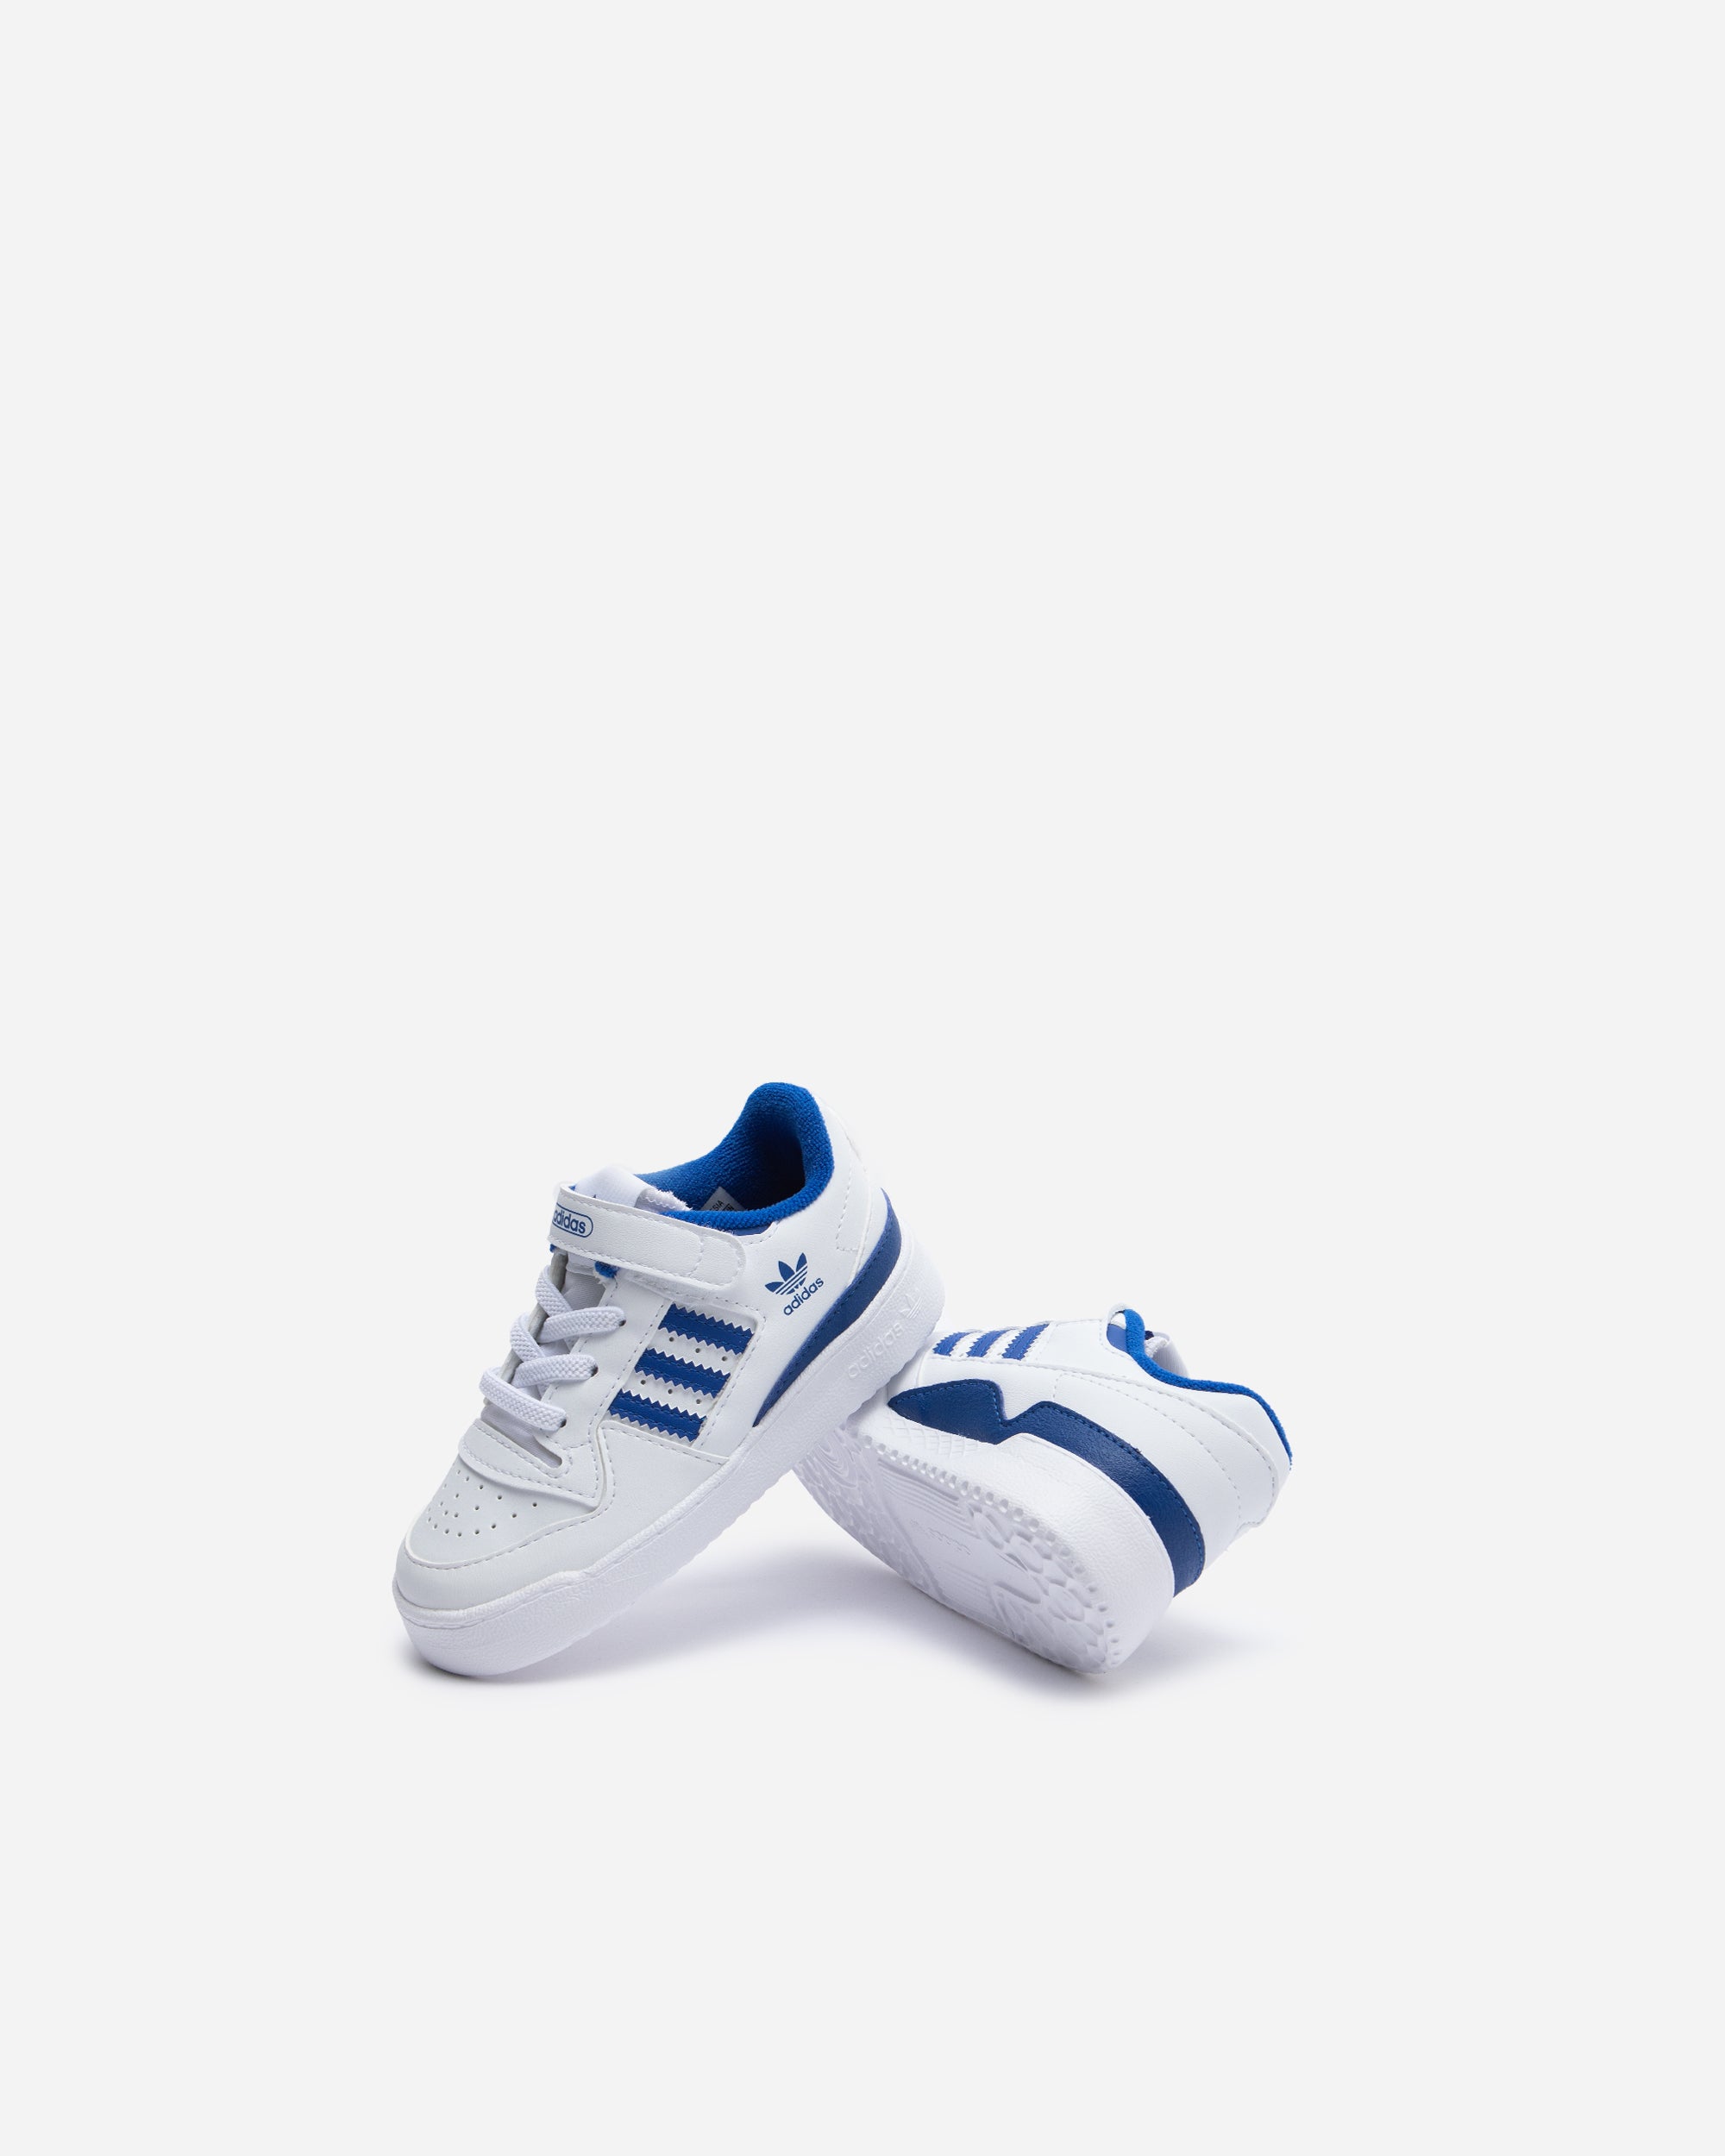 Adidas Ori Forum Low (Toddler) Cloud White/Royal Blue FY7986